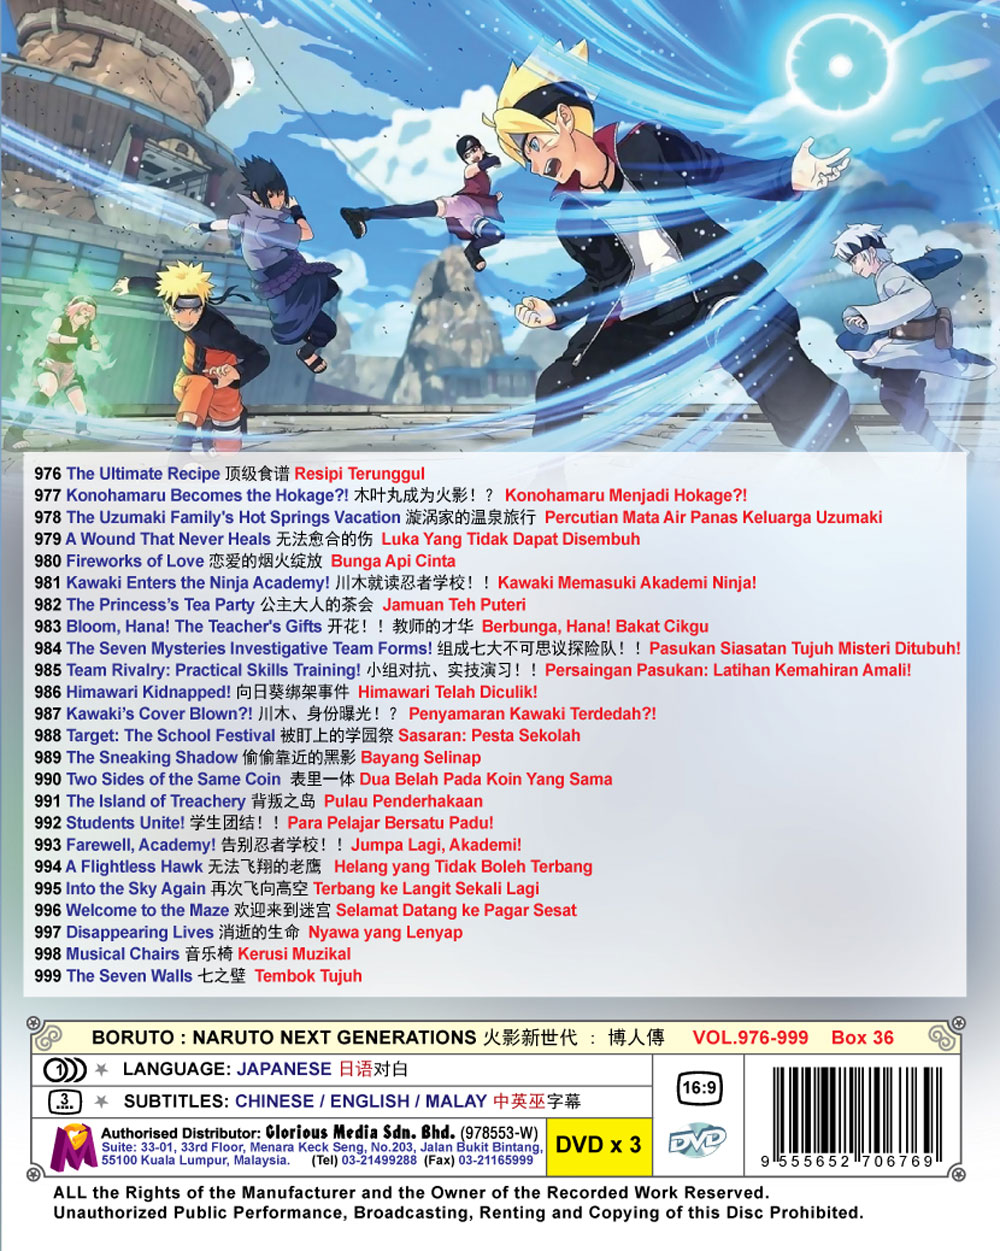 ANIME BORUTO: NARUTO NEXT GENERATIONS VOL.856-879 DVD [BOX 31] +